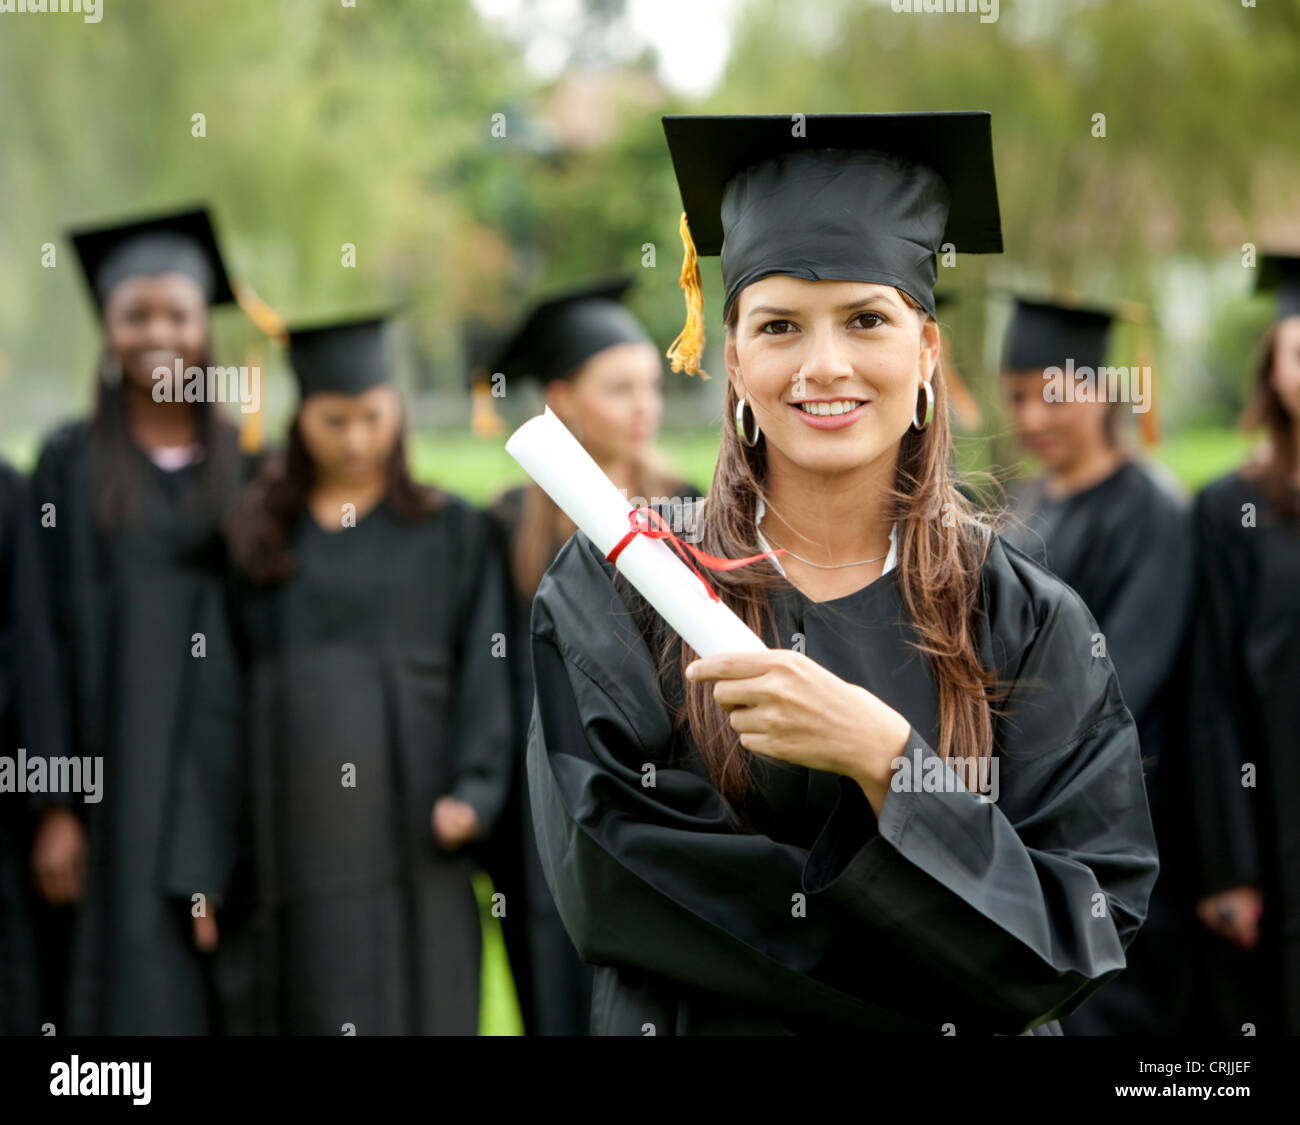 Graduating student is